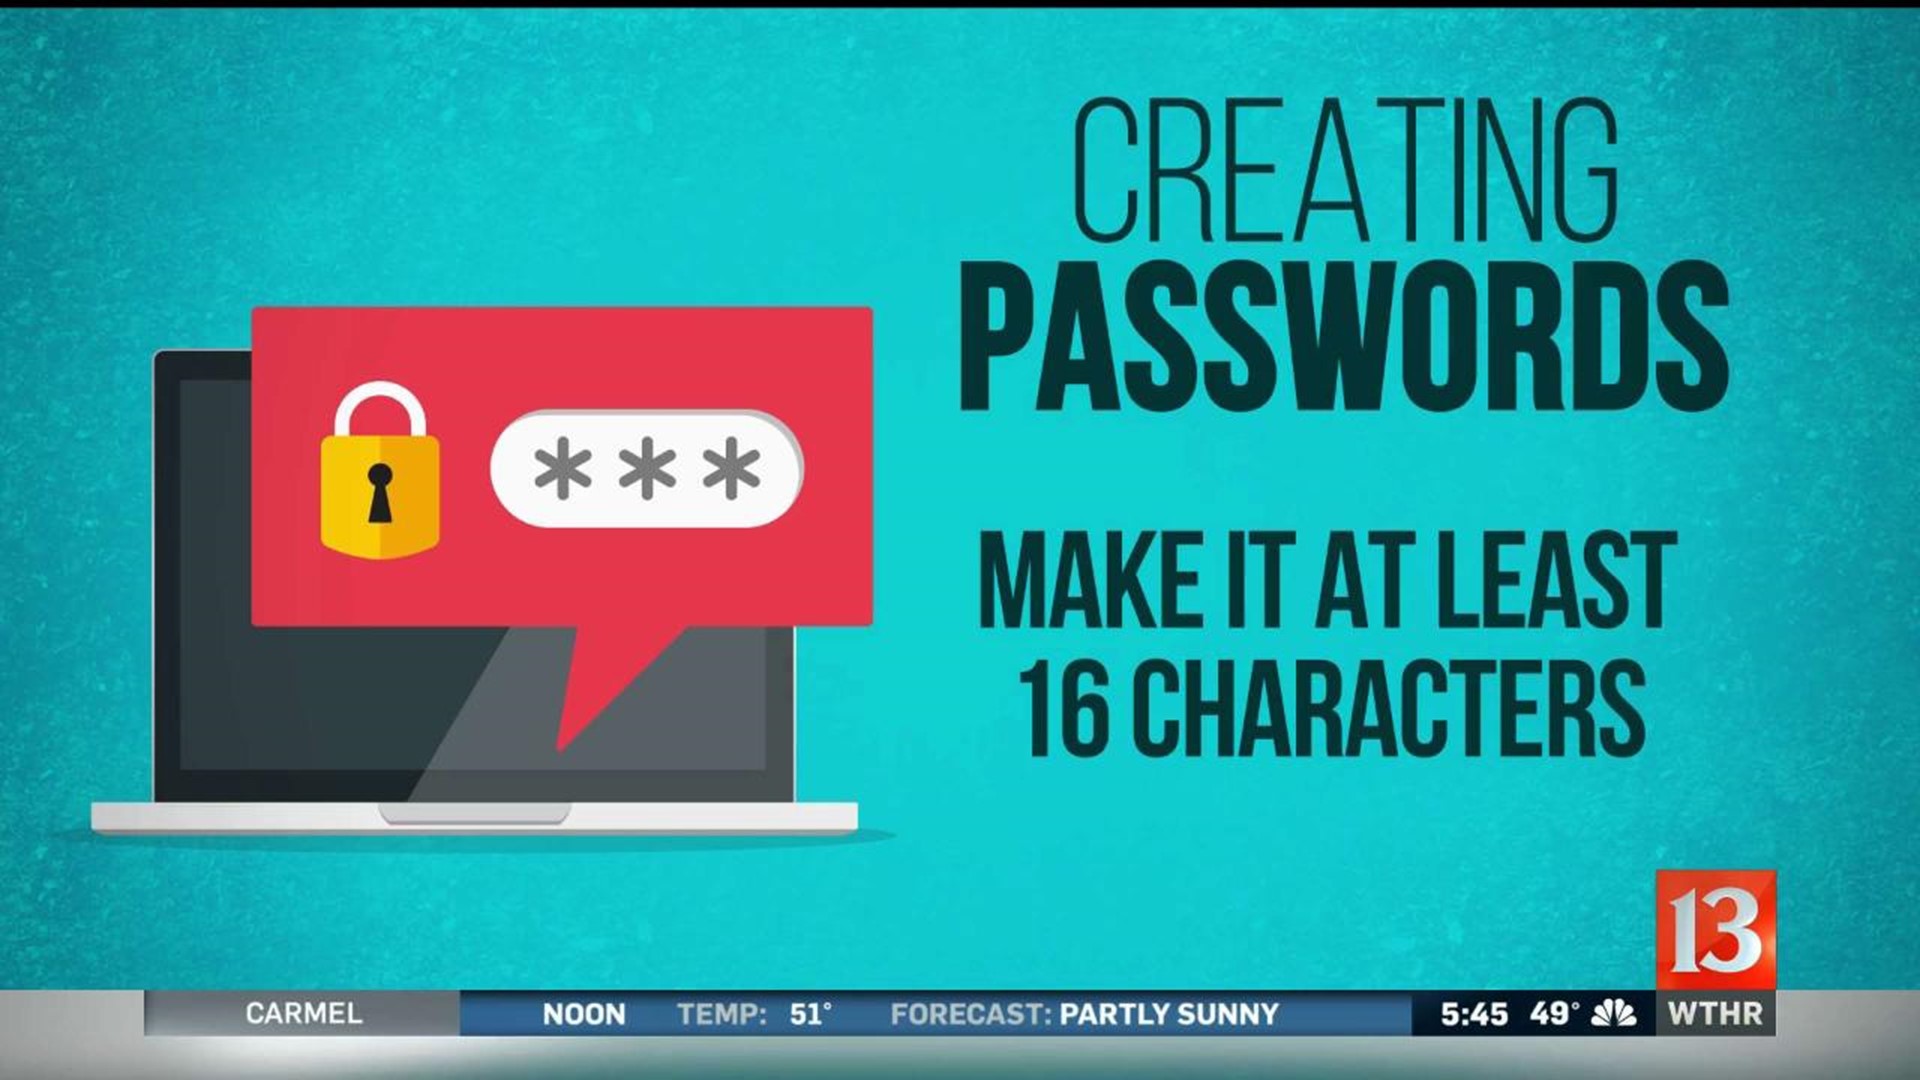 Creating stronger passwords